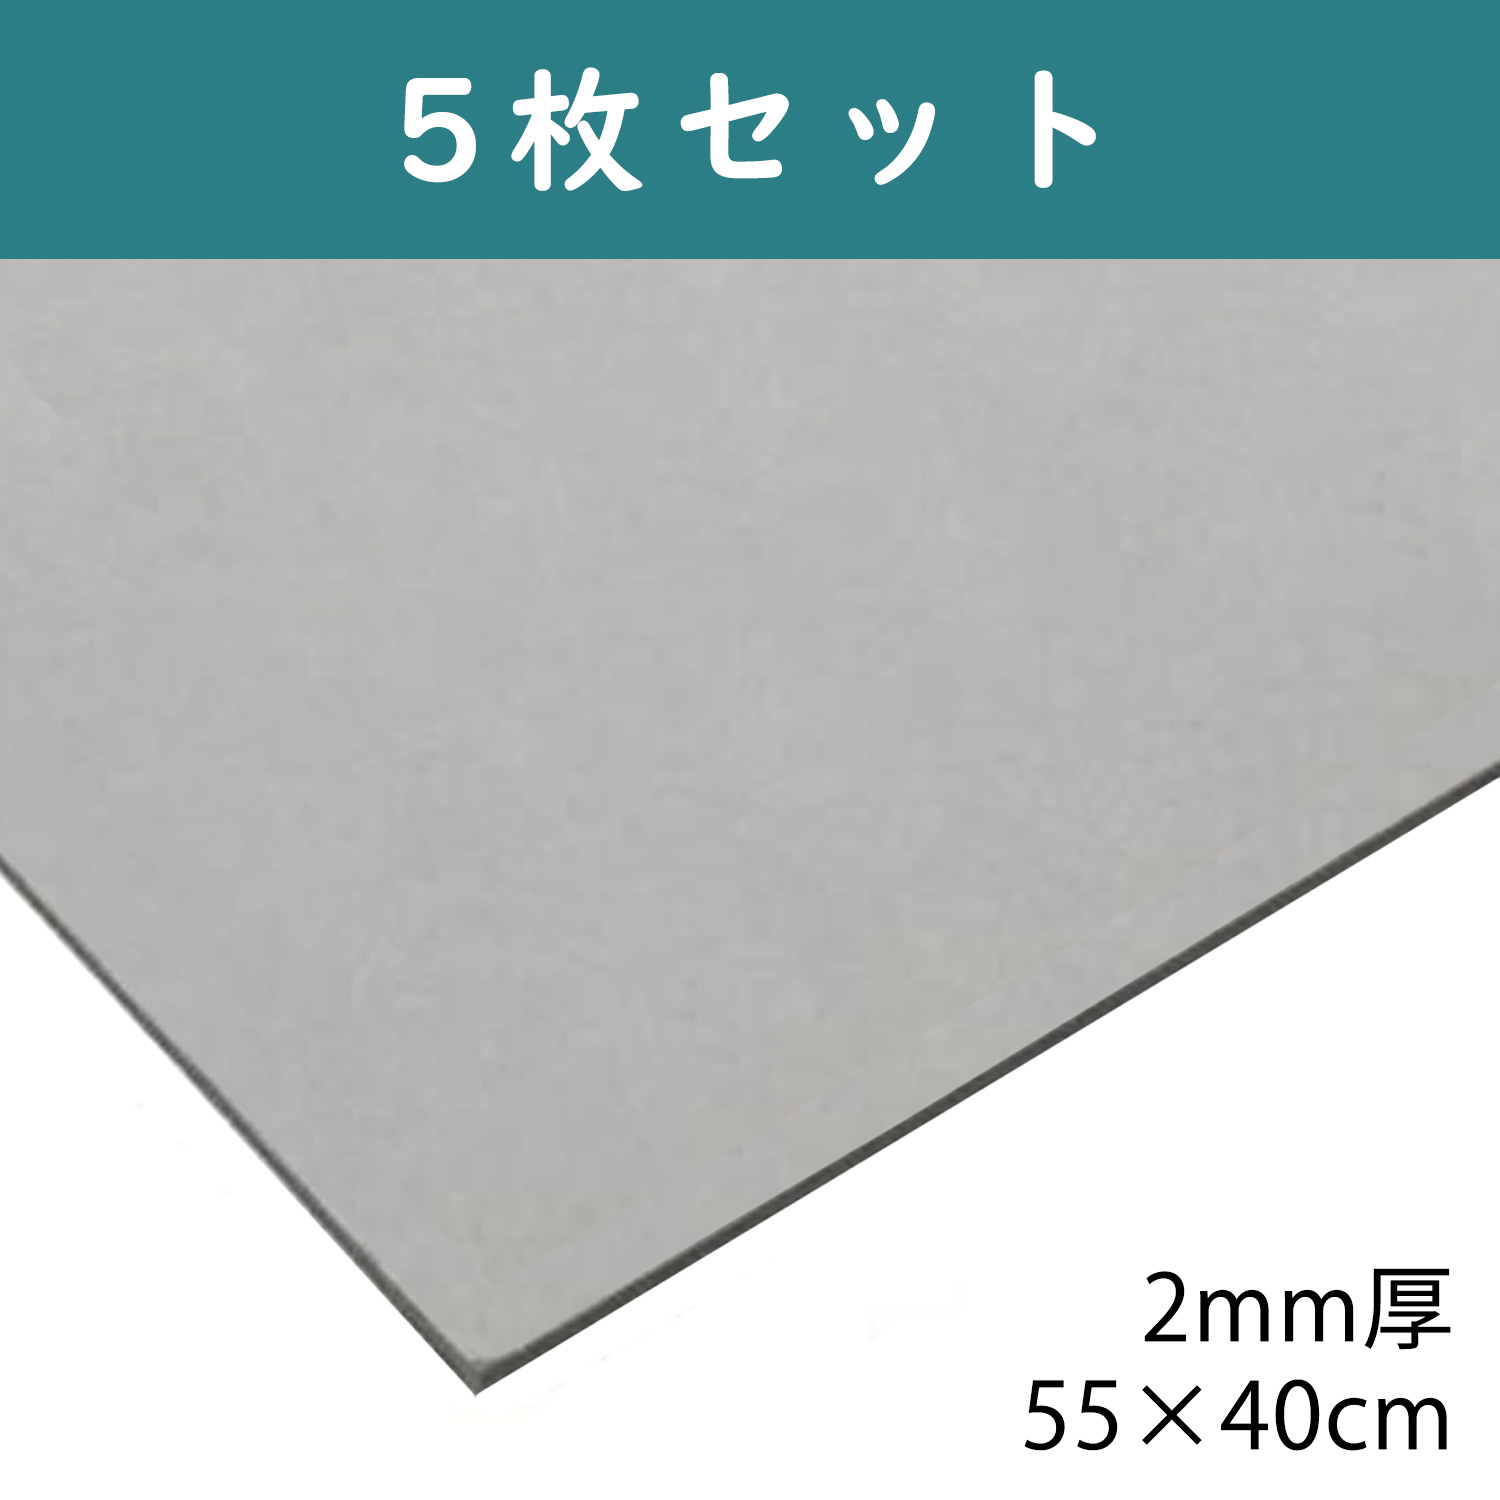 CTN1 グレー厚紙 2mm厚 55×40cm 5枚入 (袋)